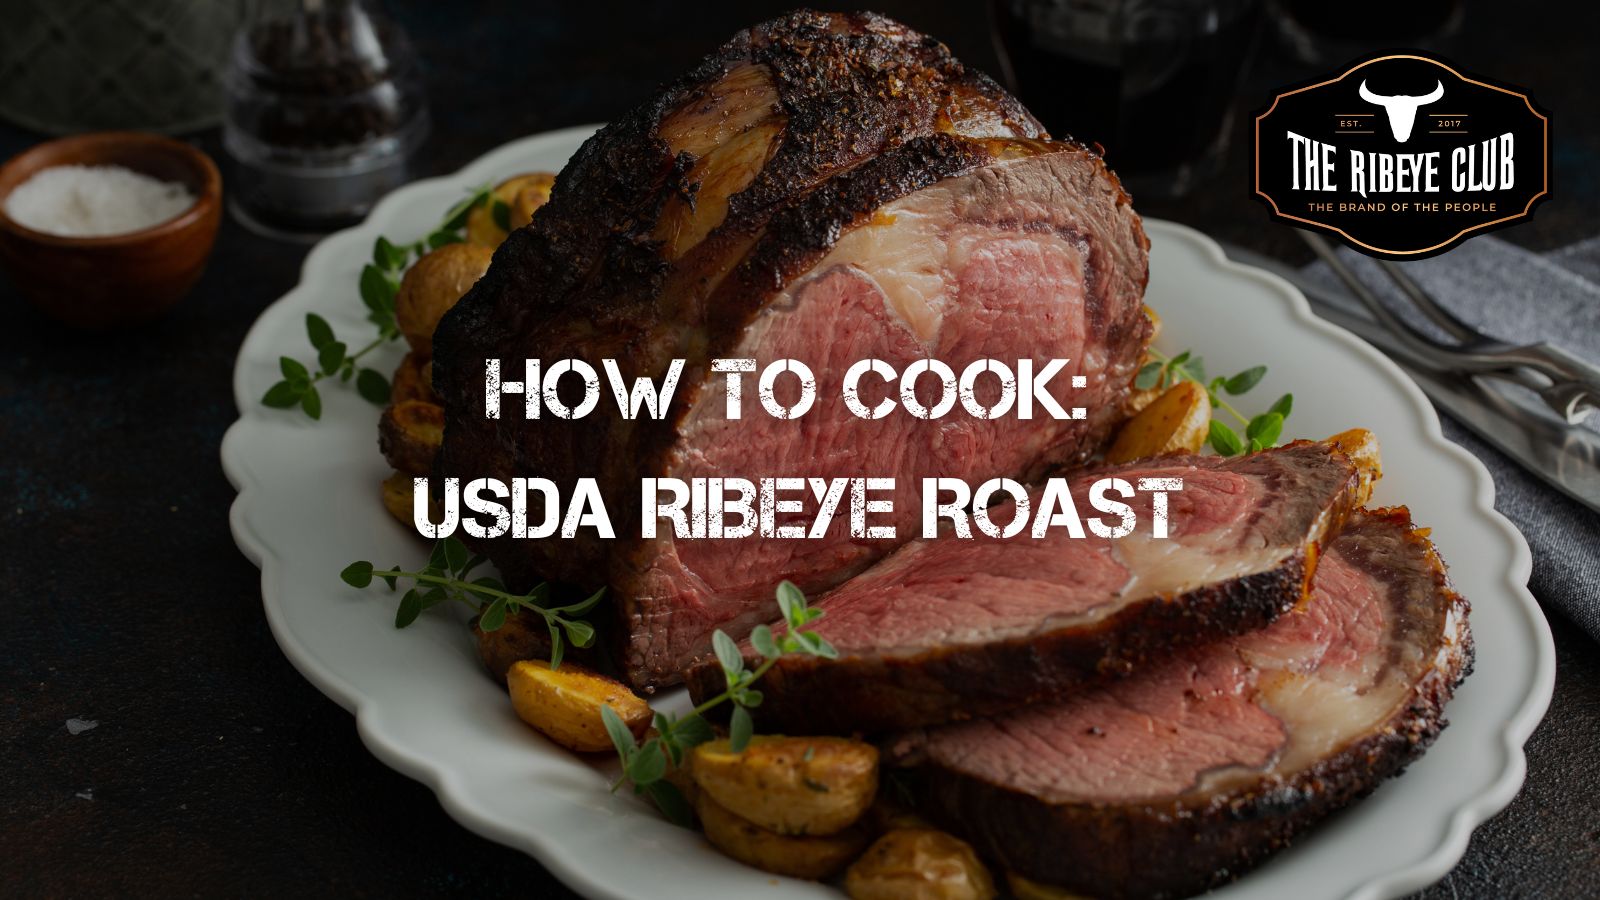 How to cook: USDA Ribeye Roast